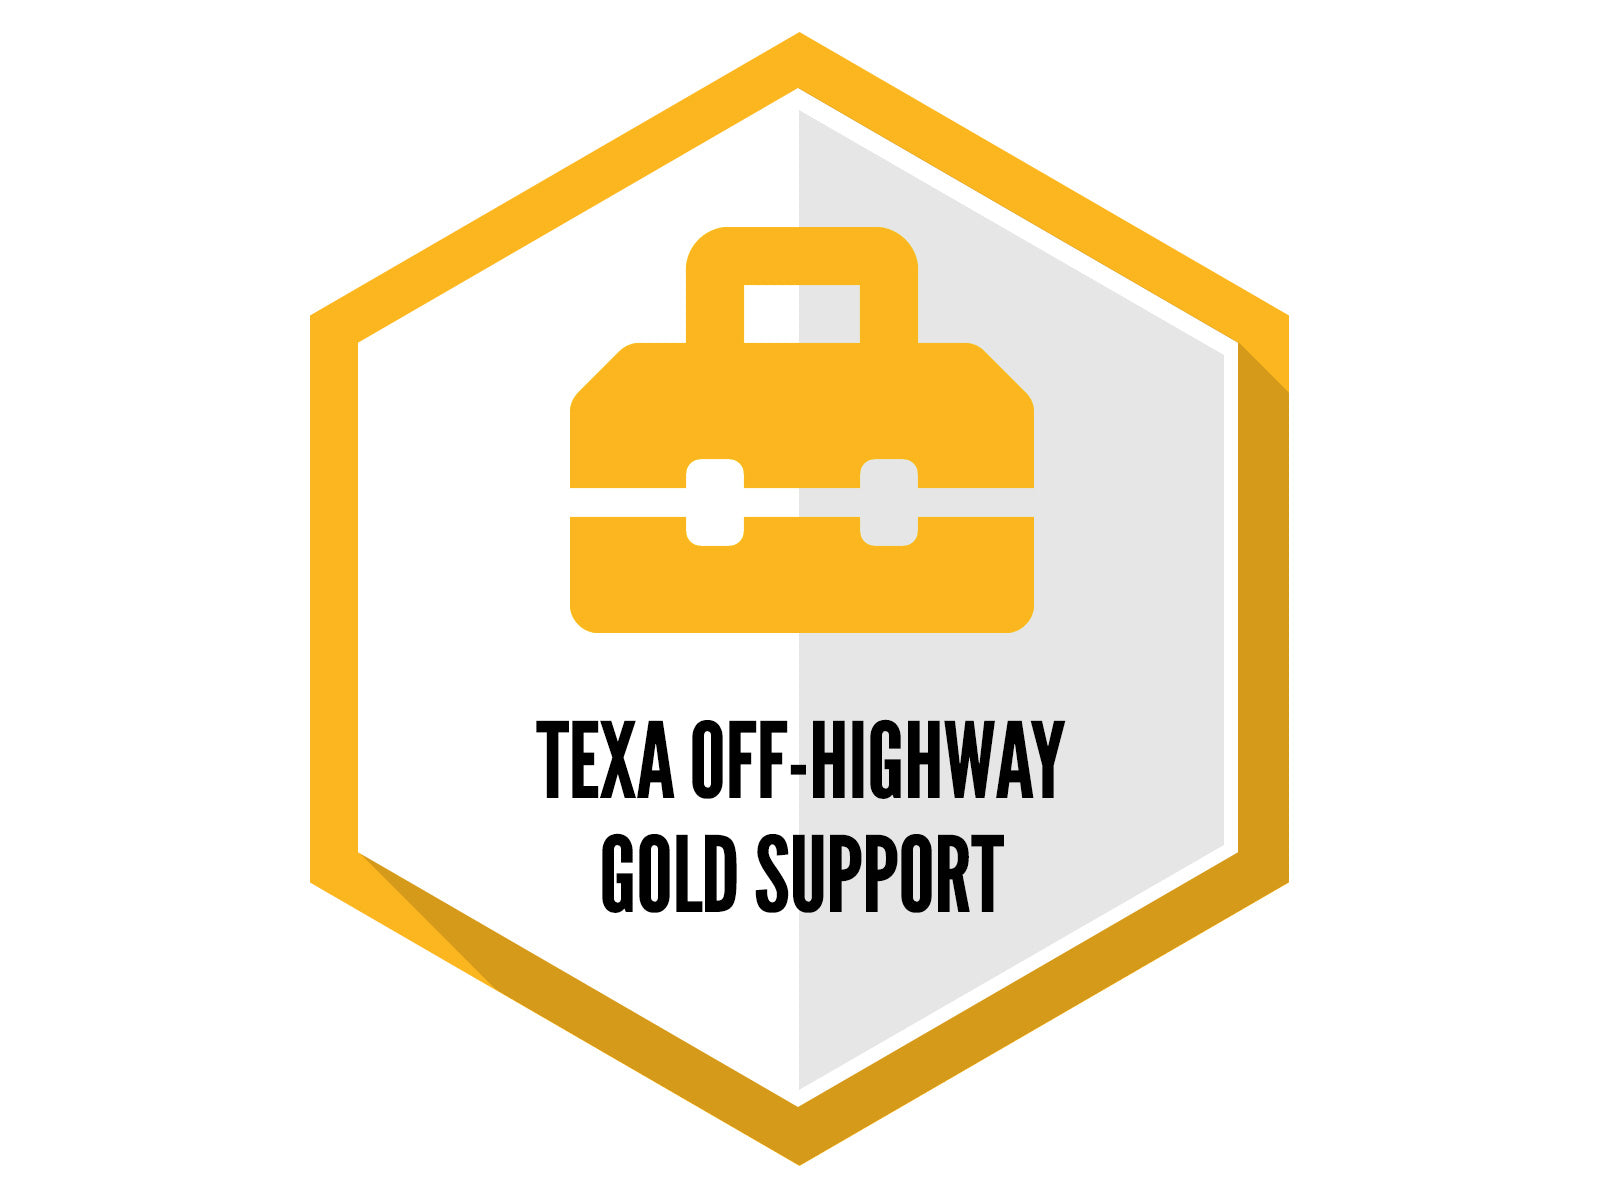 TEXA Off Highway Support - Gold